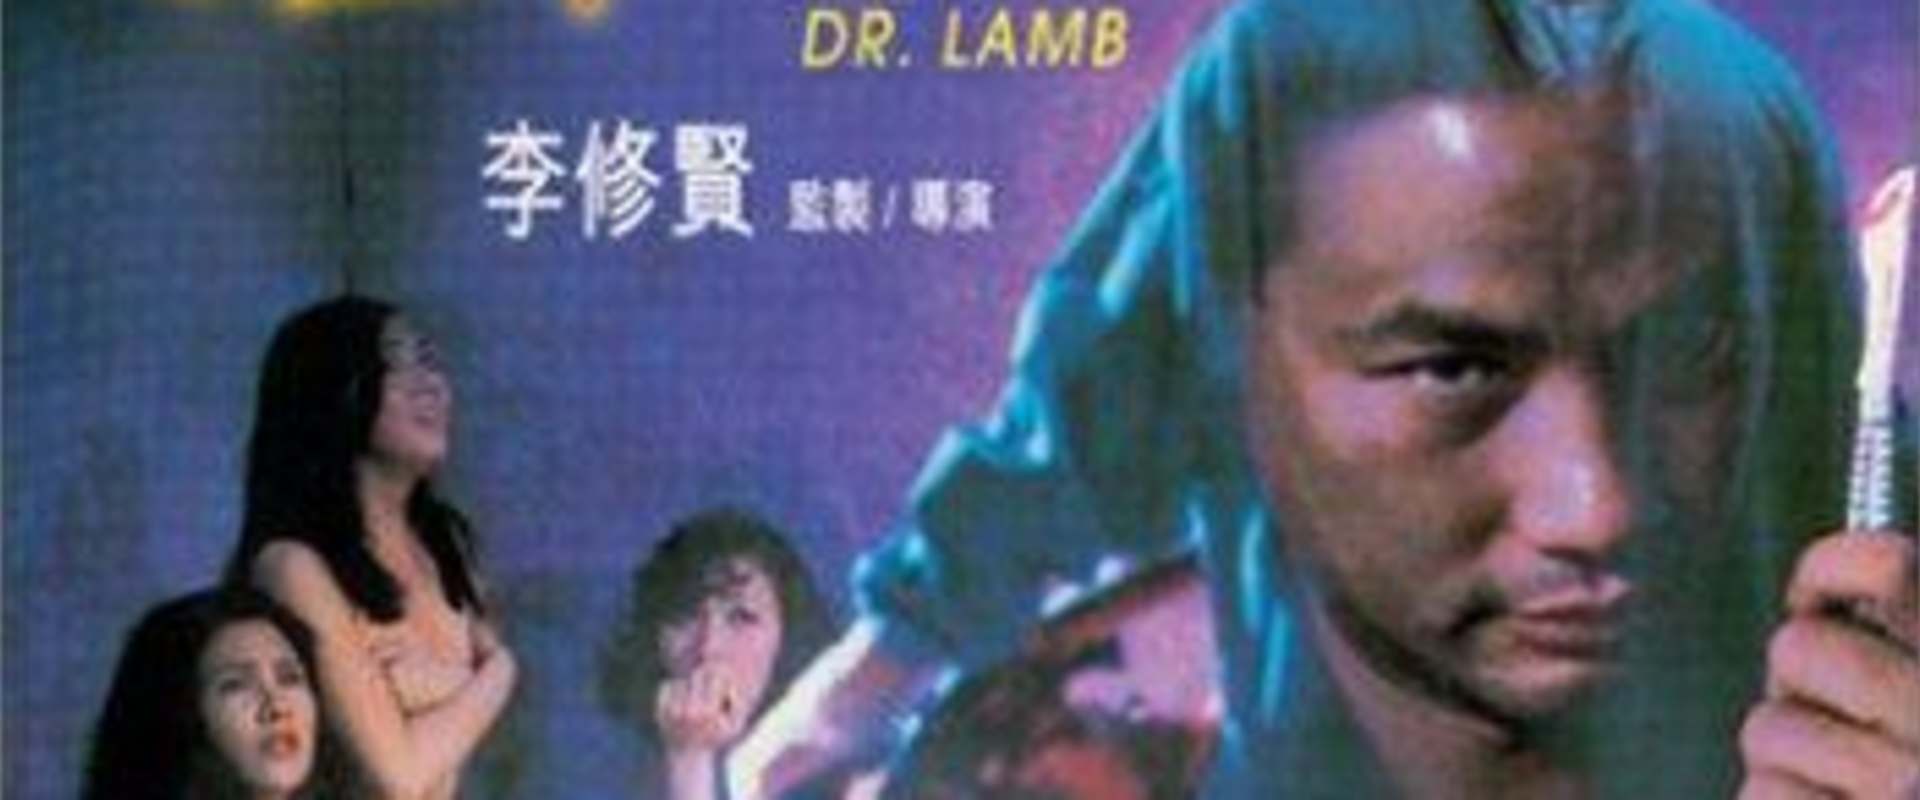 Dr. Lamb background 1